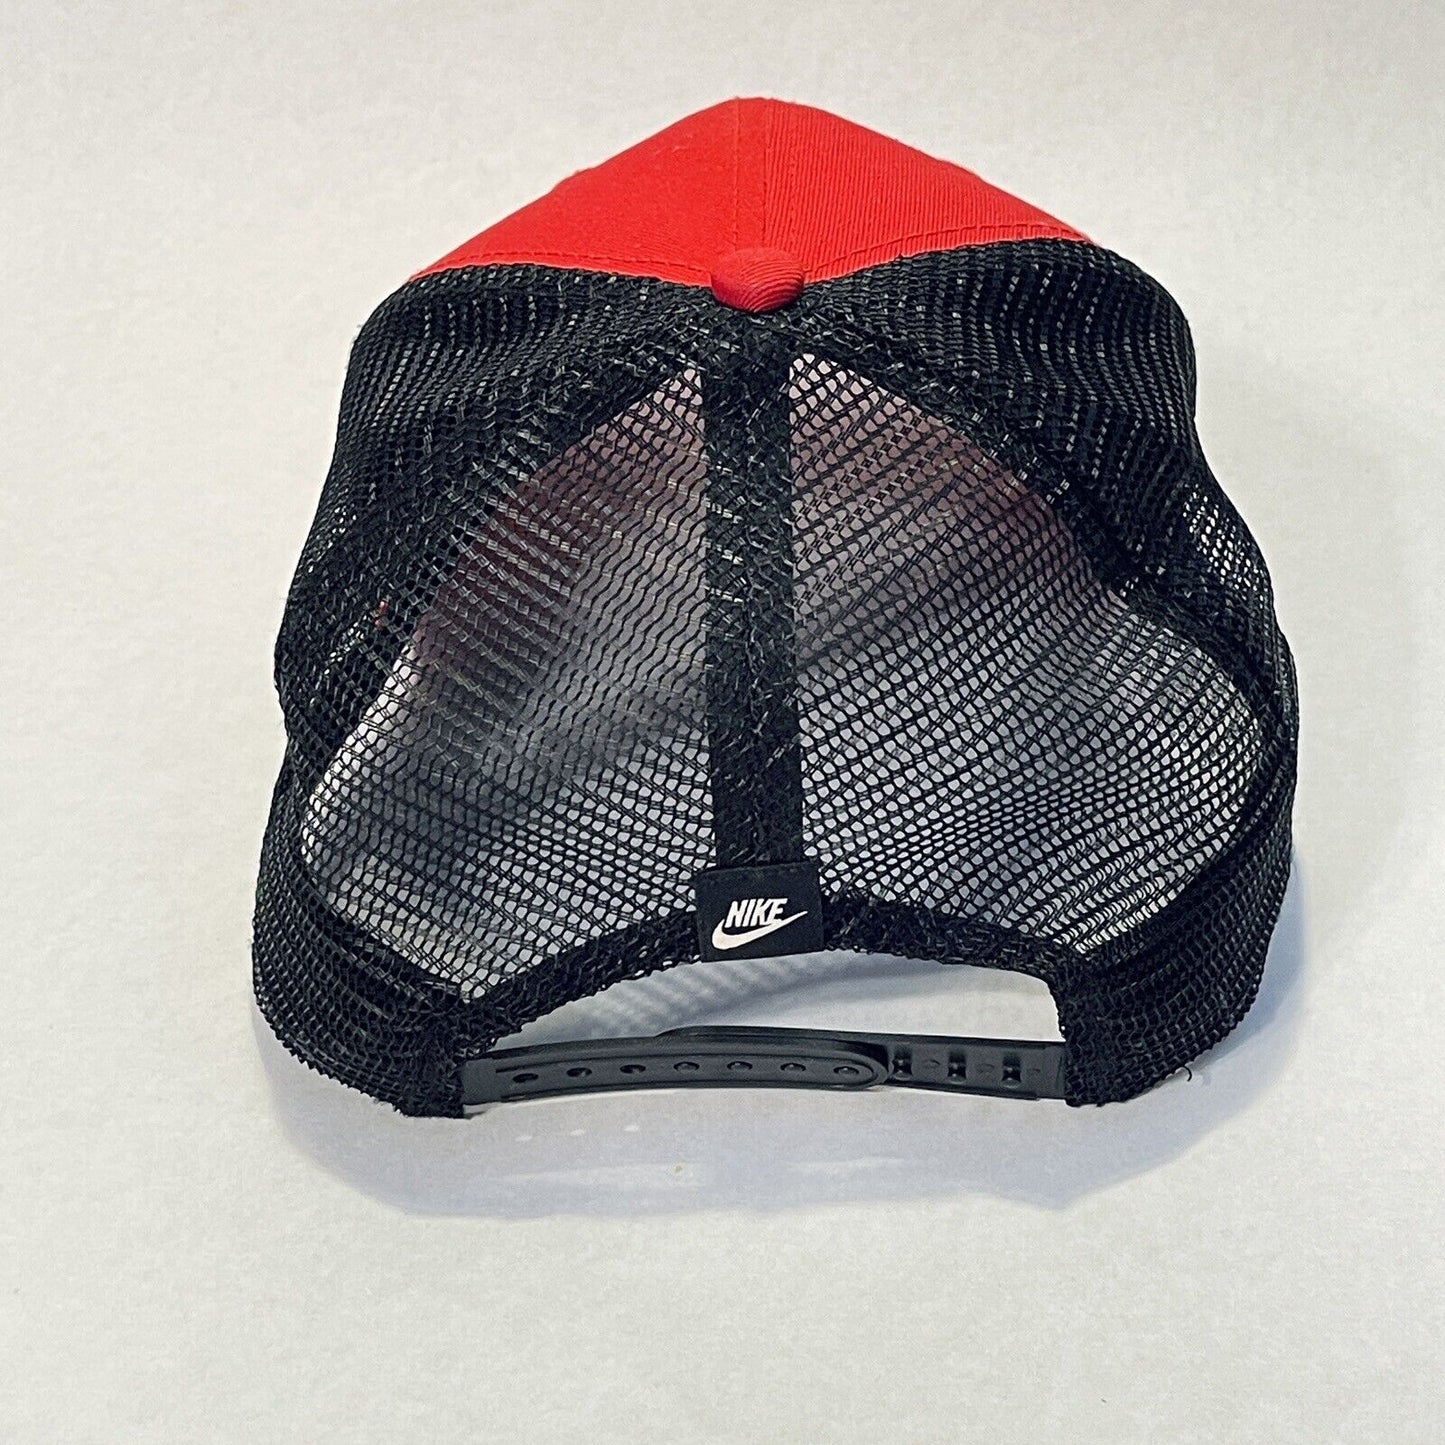 Nike Air Classic 99 Snapback Mesh Red Black 6 Panel Hat Cap Trucker Adjustable